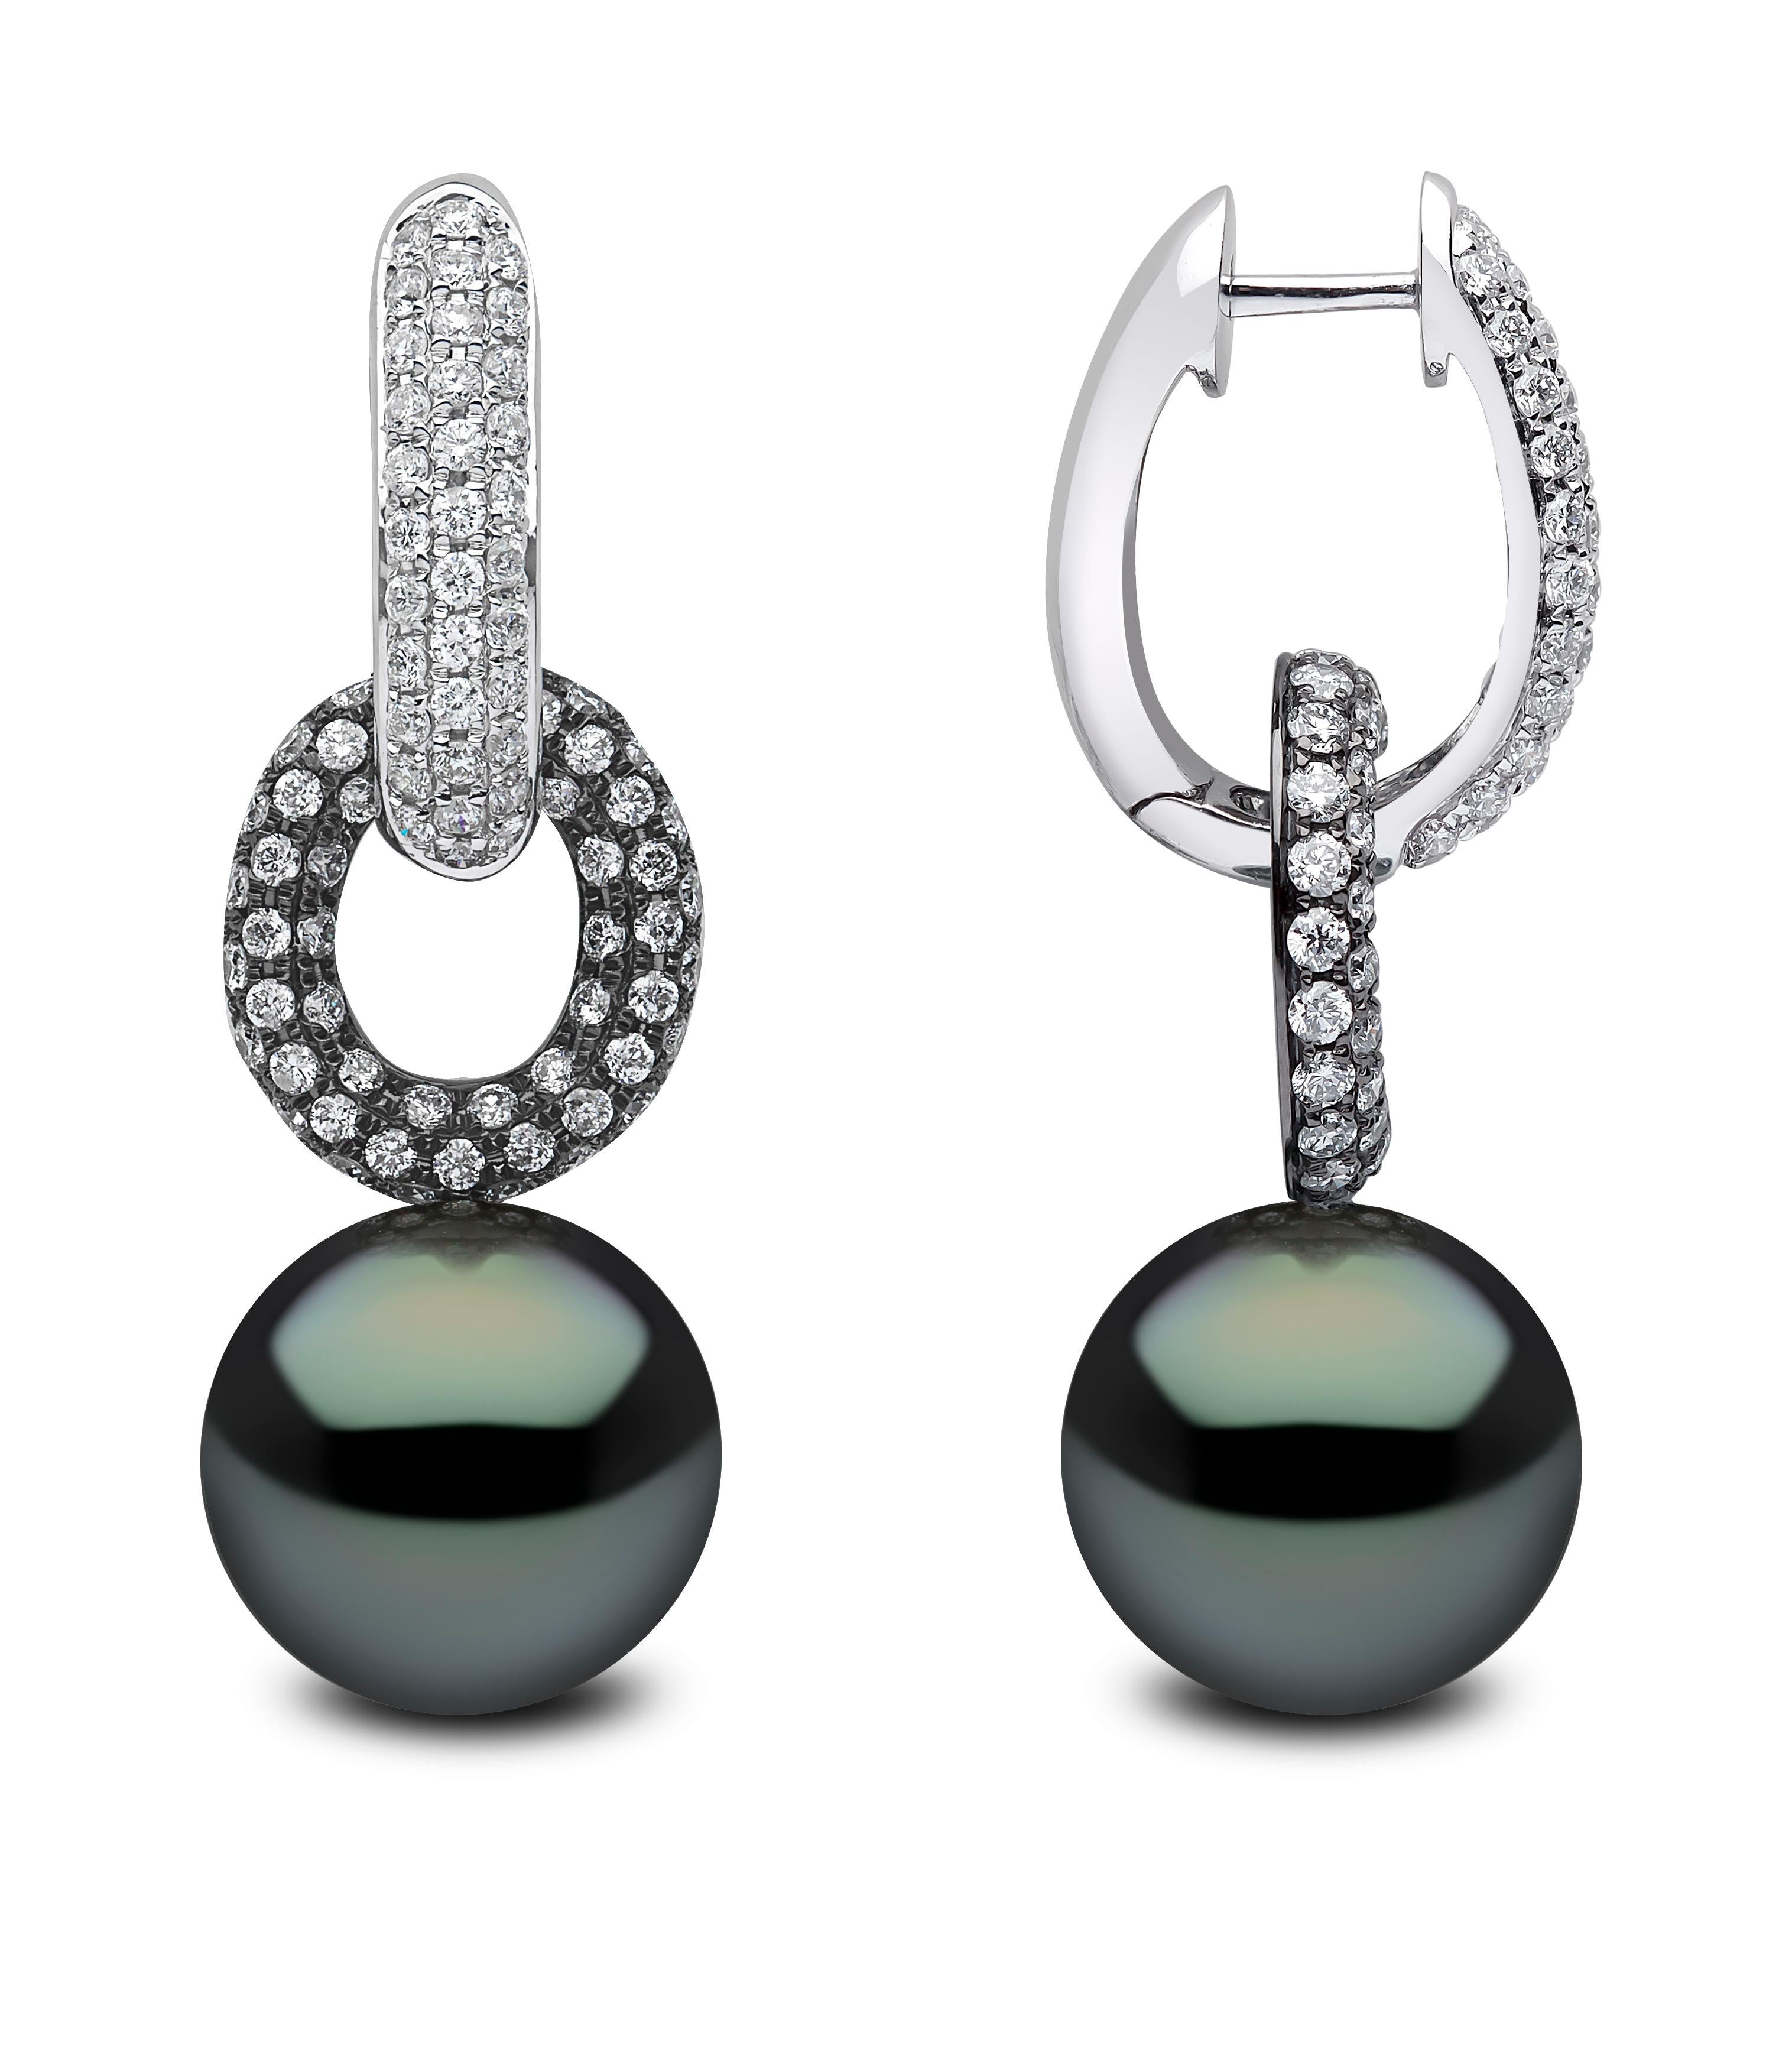 Modern Yoko London Tahitian Pearl and Diamond Earrings in 18k White and Black Gold